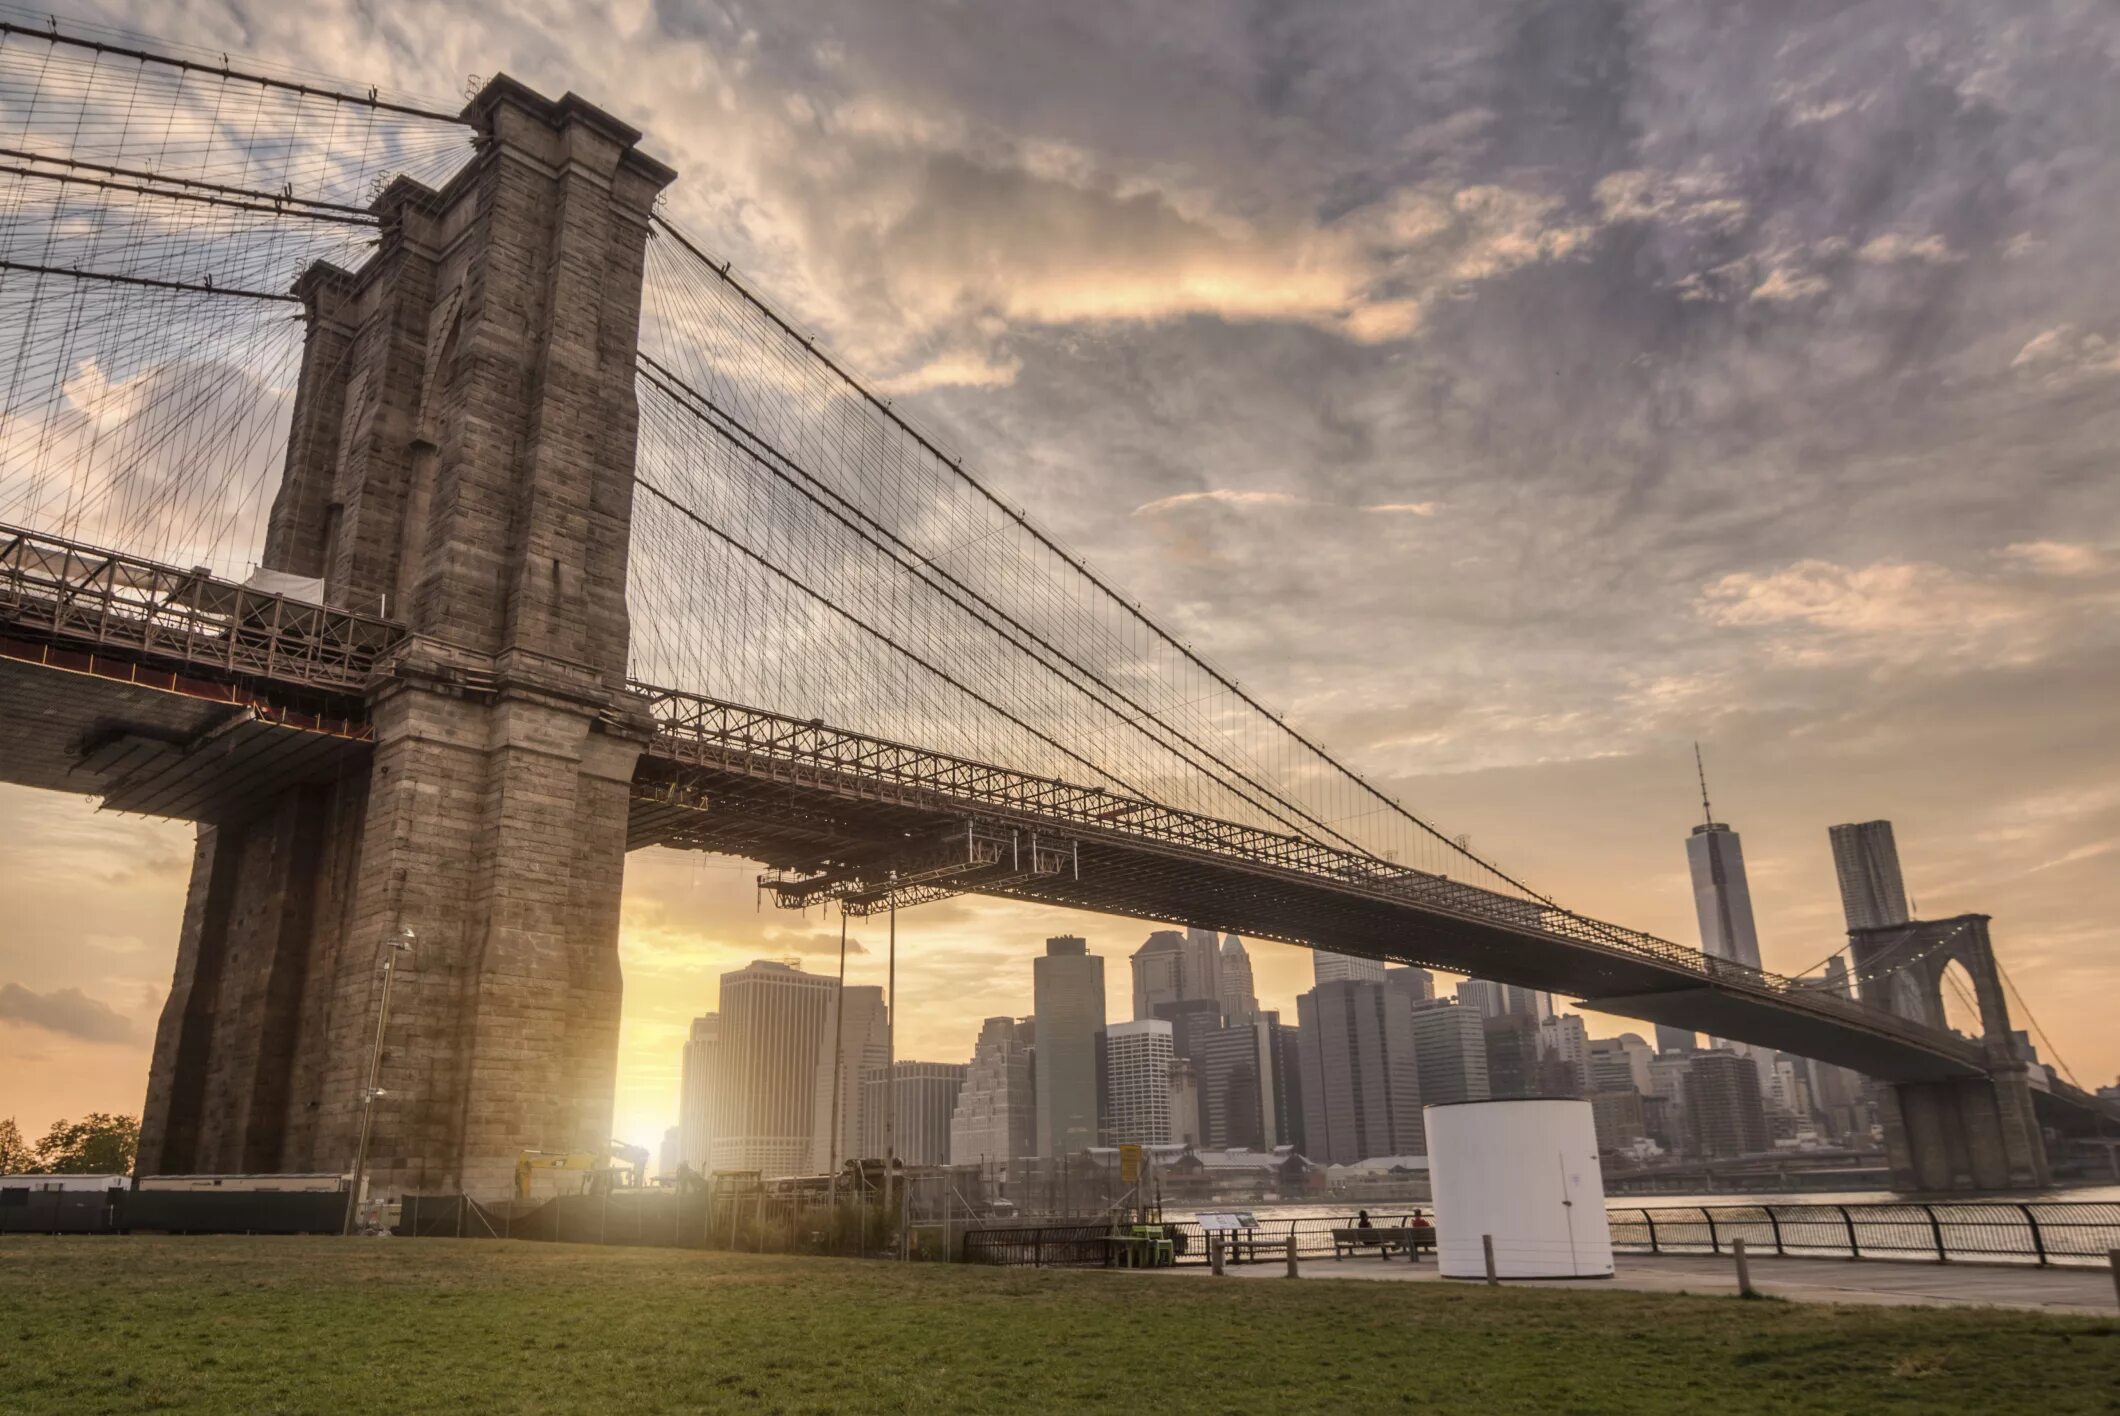 Бруклин мост. Бруклинский мост Нью-Йорк. Висячий Бруклинский мост. Мост Нью-Йорк Бруклинский 2013. Бруклинский мост Манхеттен в Нью-Йорке.